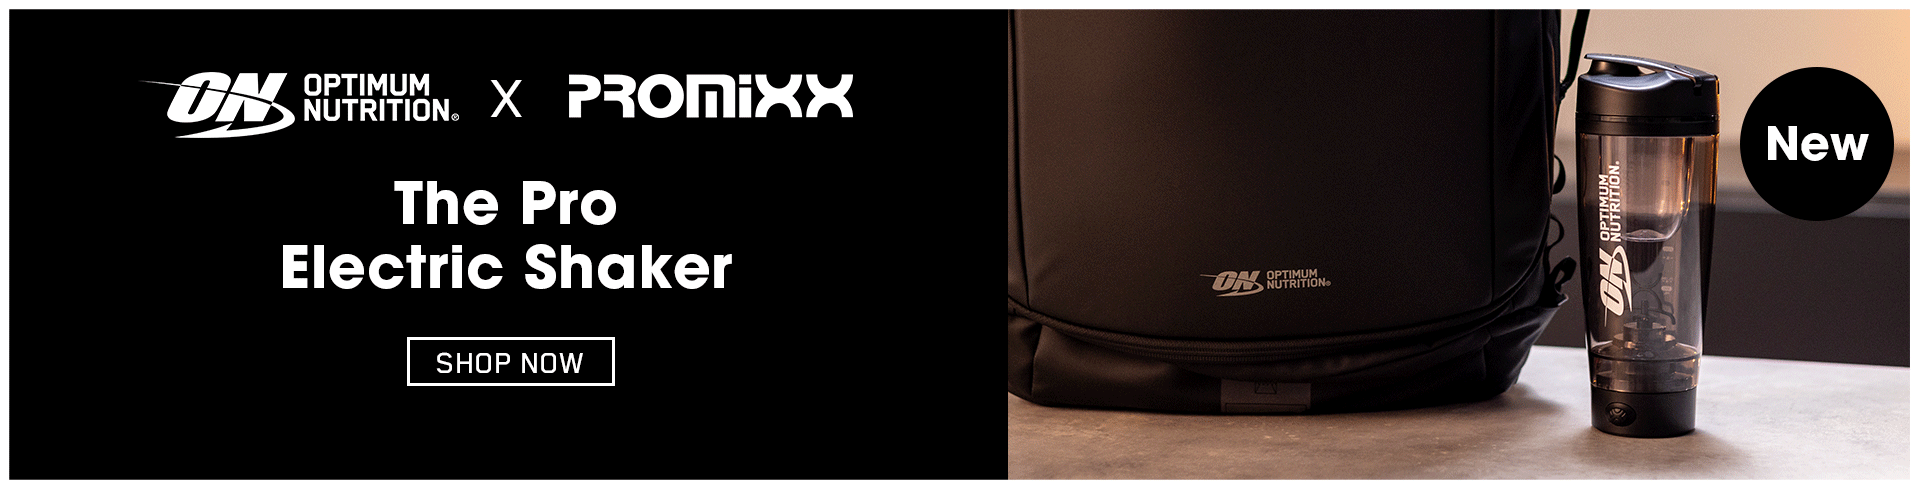 ON-Promixx-banners-DHSDouble-Hotspot---1920X488.png